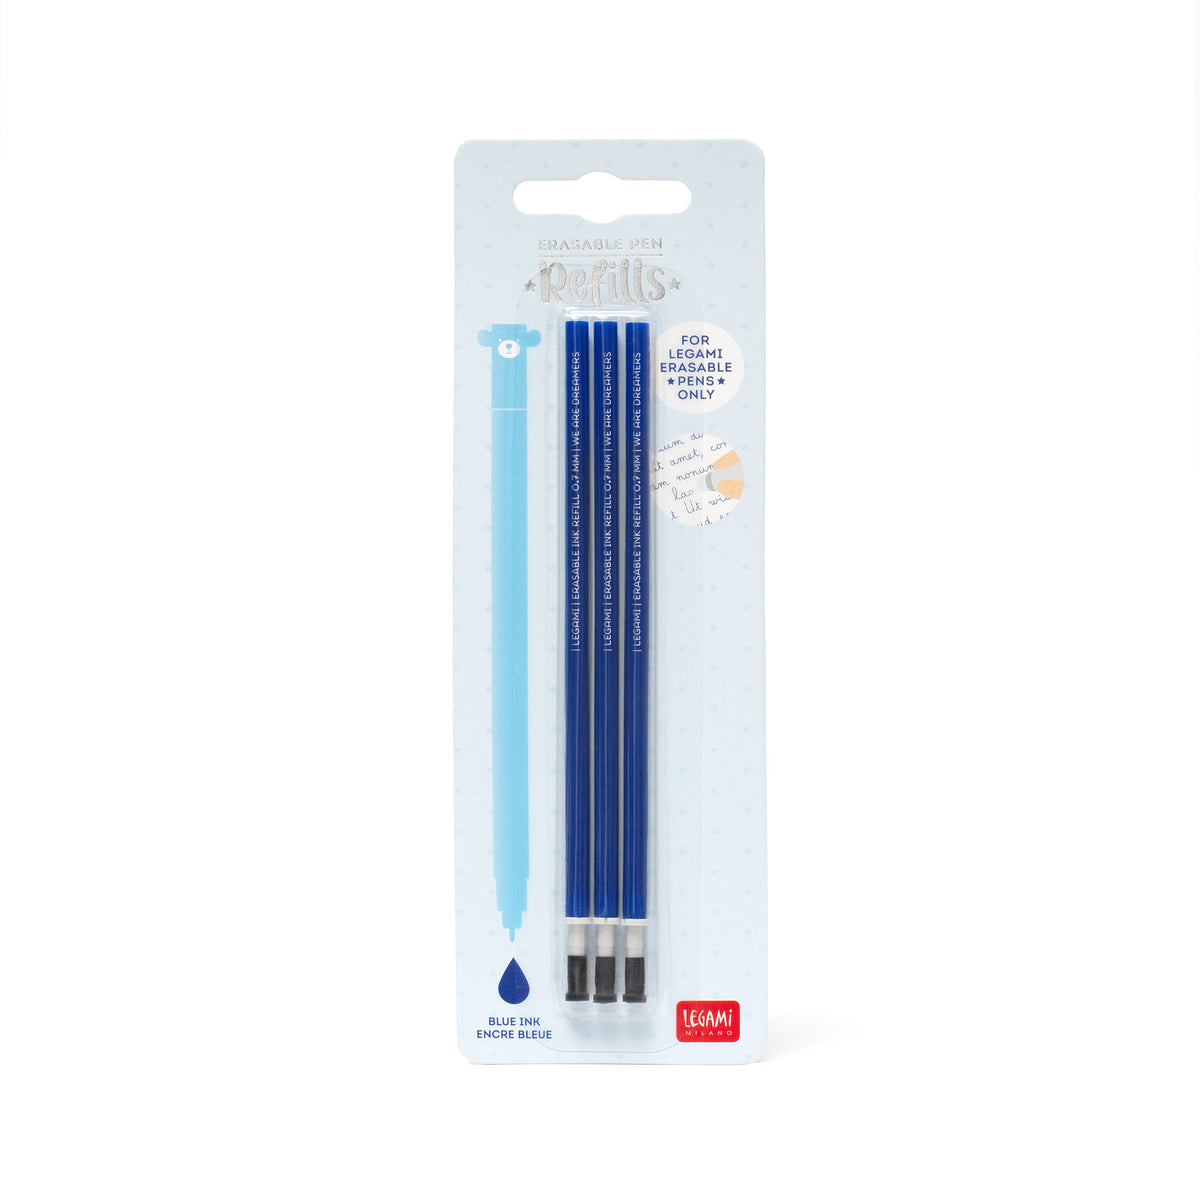 Legami Erasable Gel Pen Refills - blue in packaging